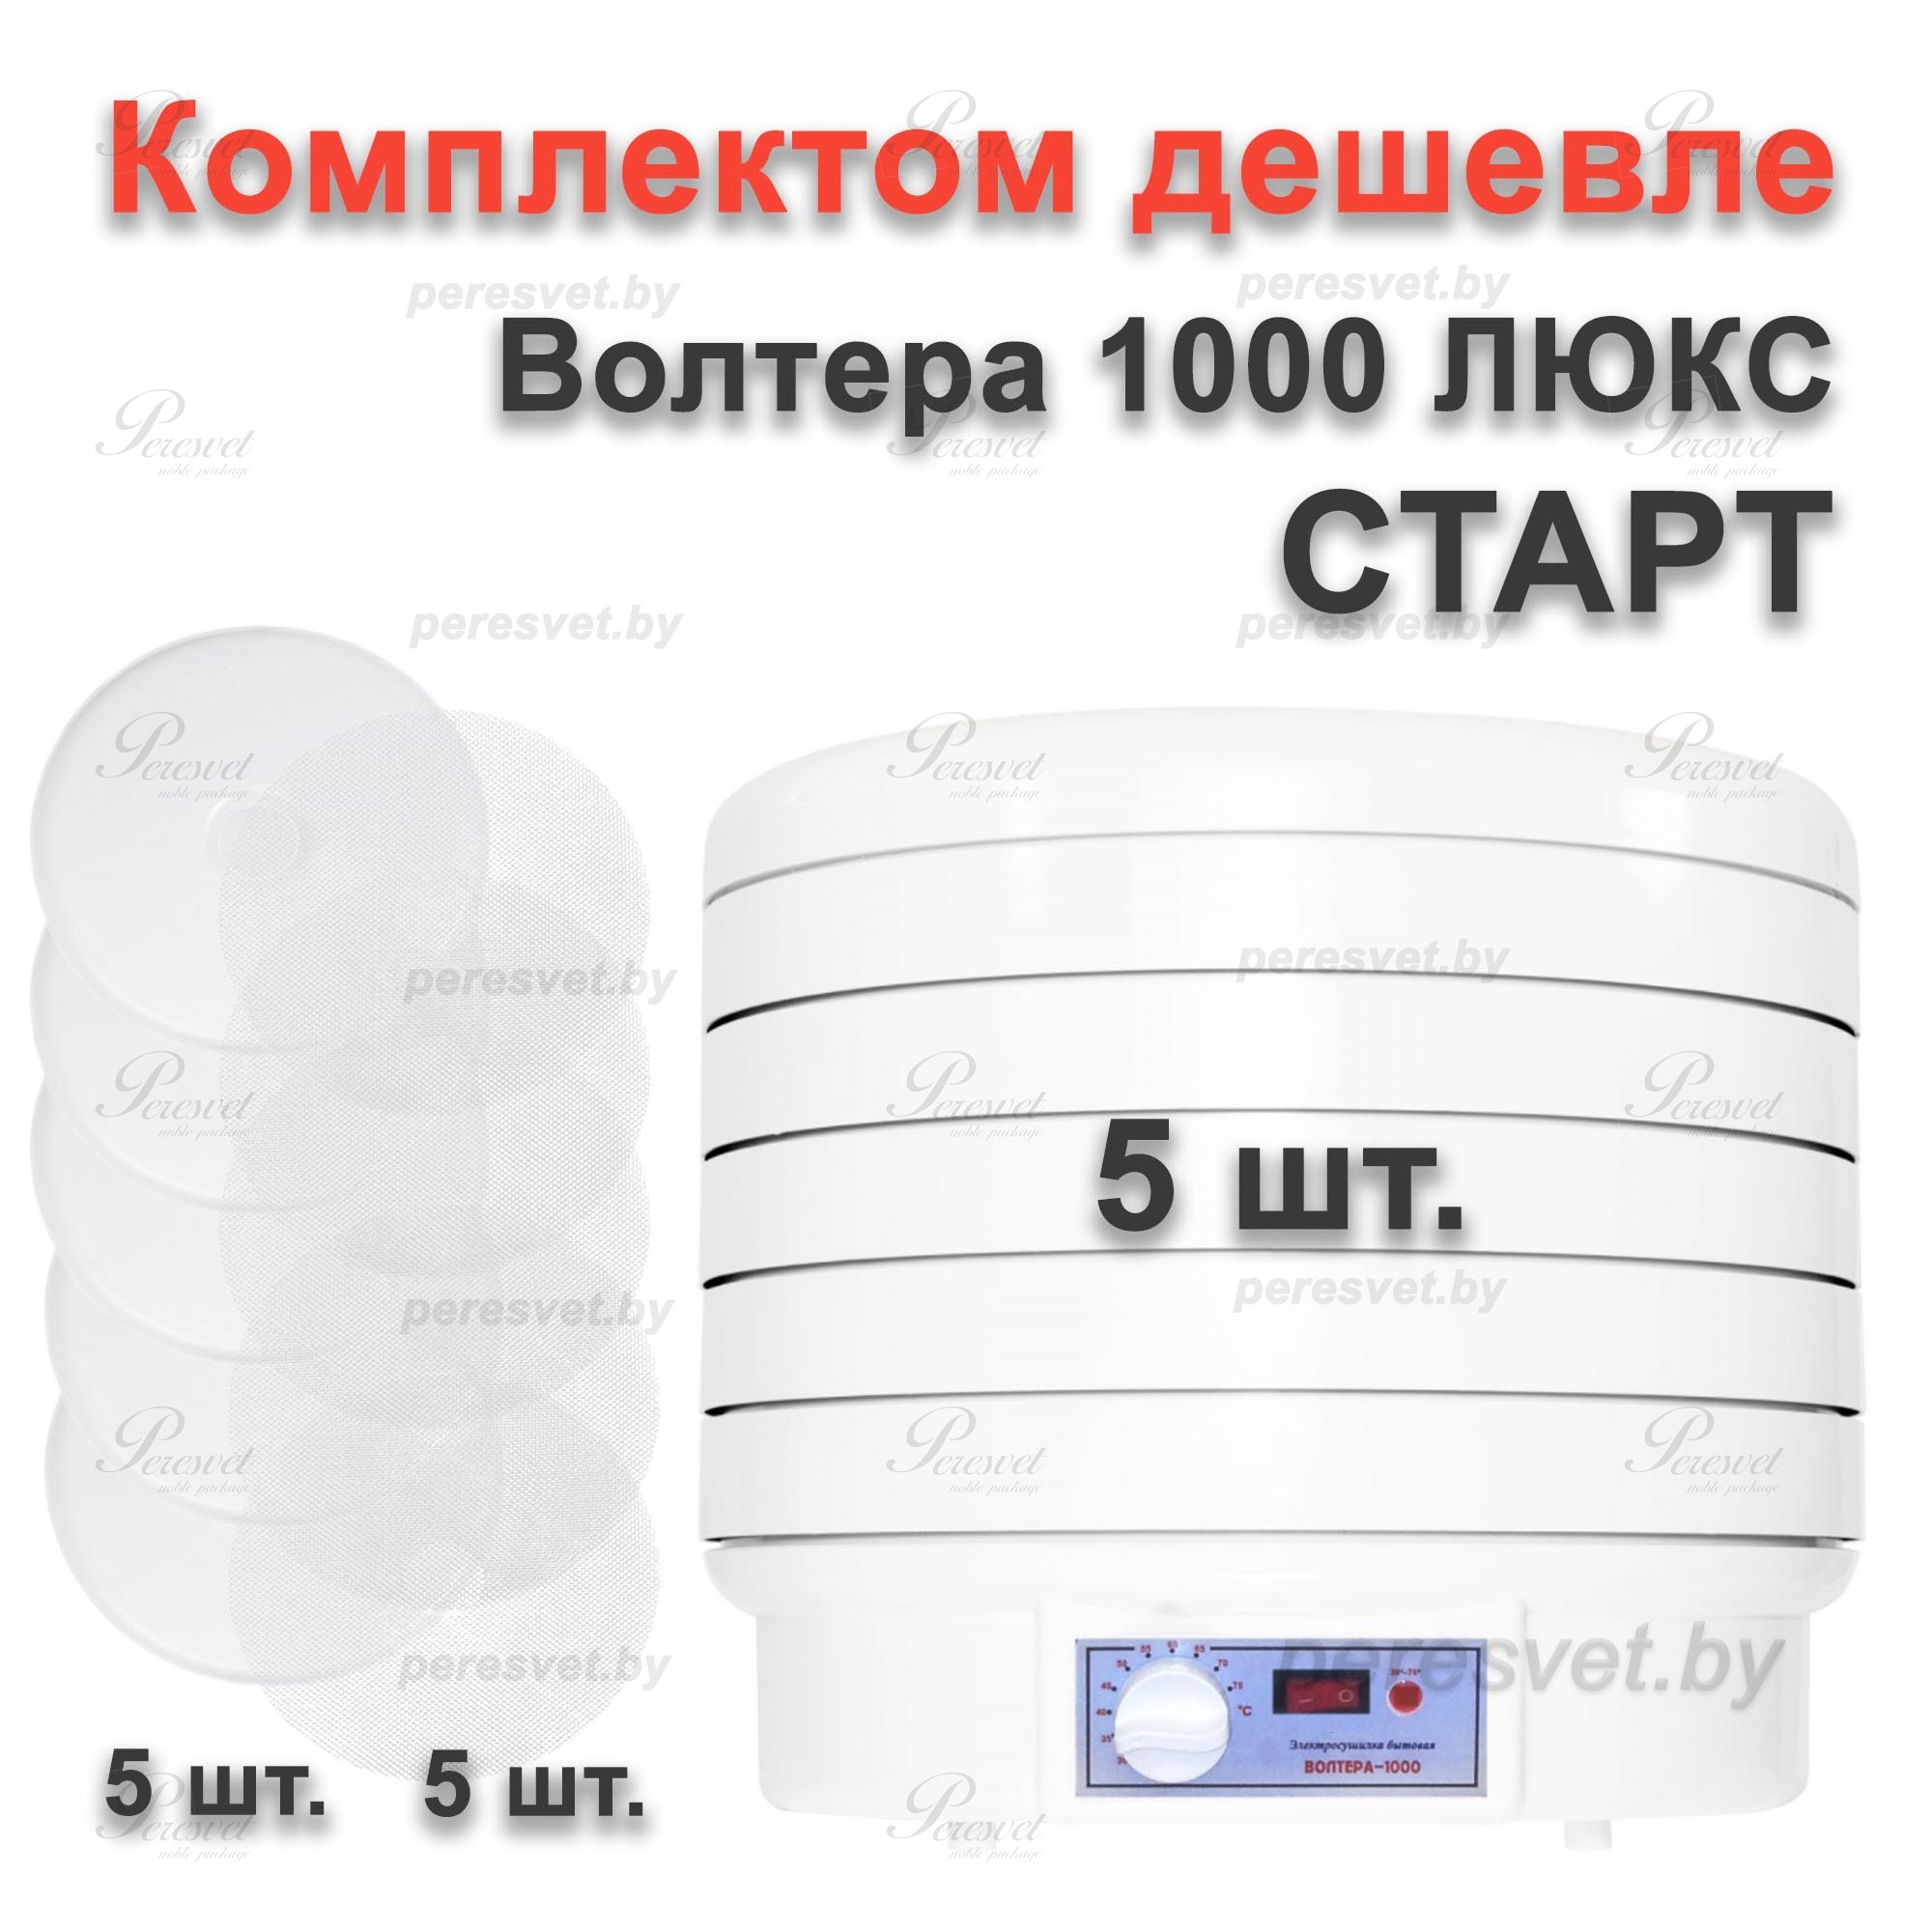 Электросушилка ВОЛТЕРА 1000 ЛЮКС, комплект СТАРТ 